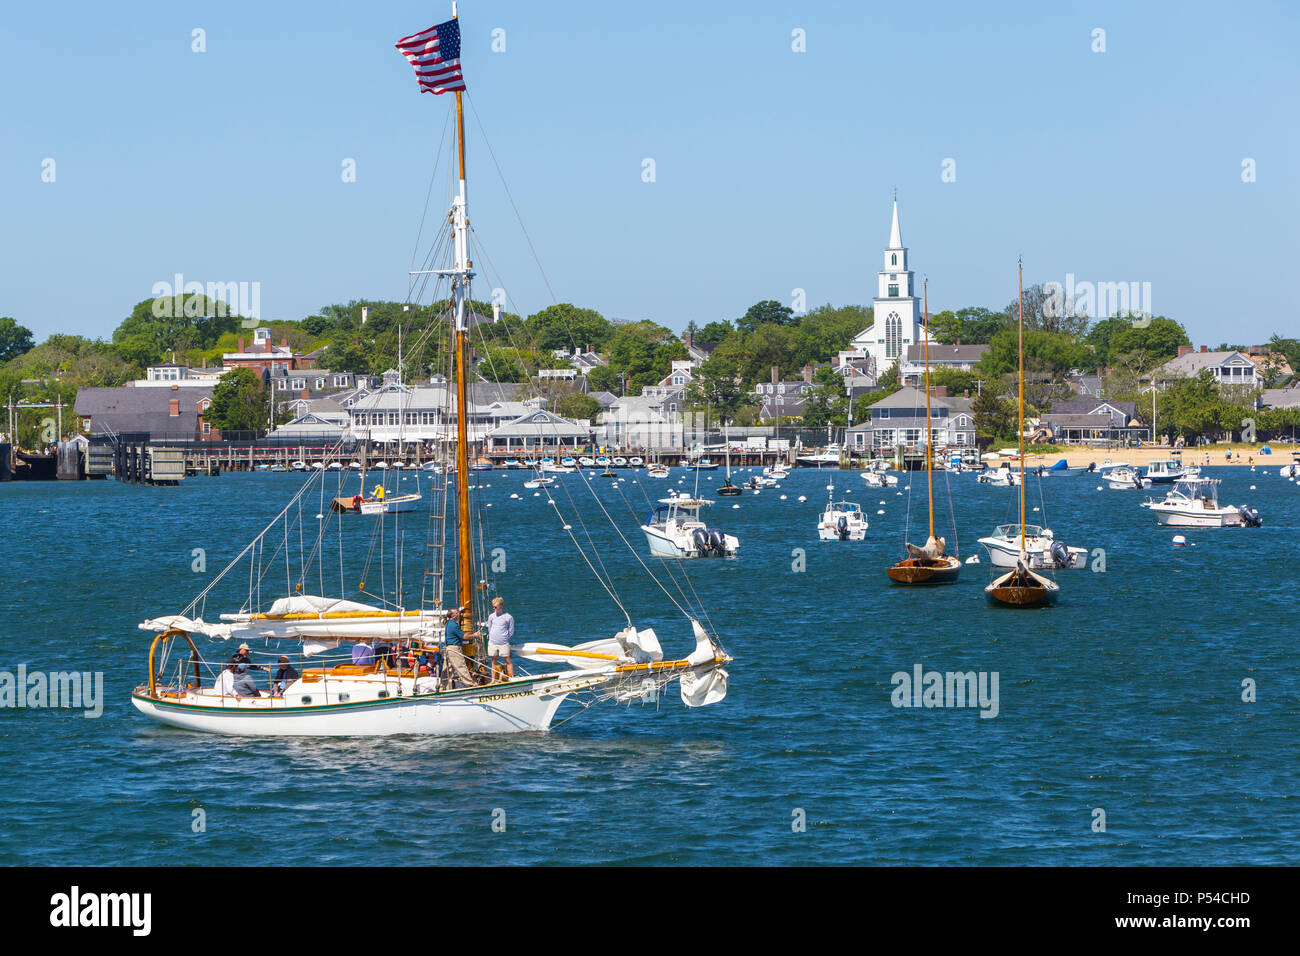 Sloop 'Endeavor' among sailboats and other pleasure craft moored in Nantucket harbor in Nantucket, Massachusetts. Stock Photo